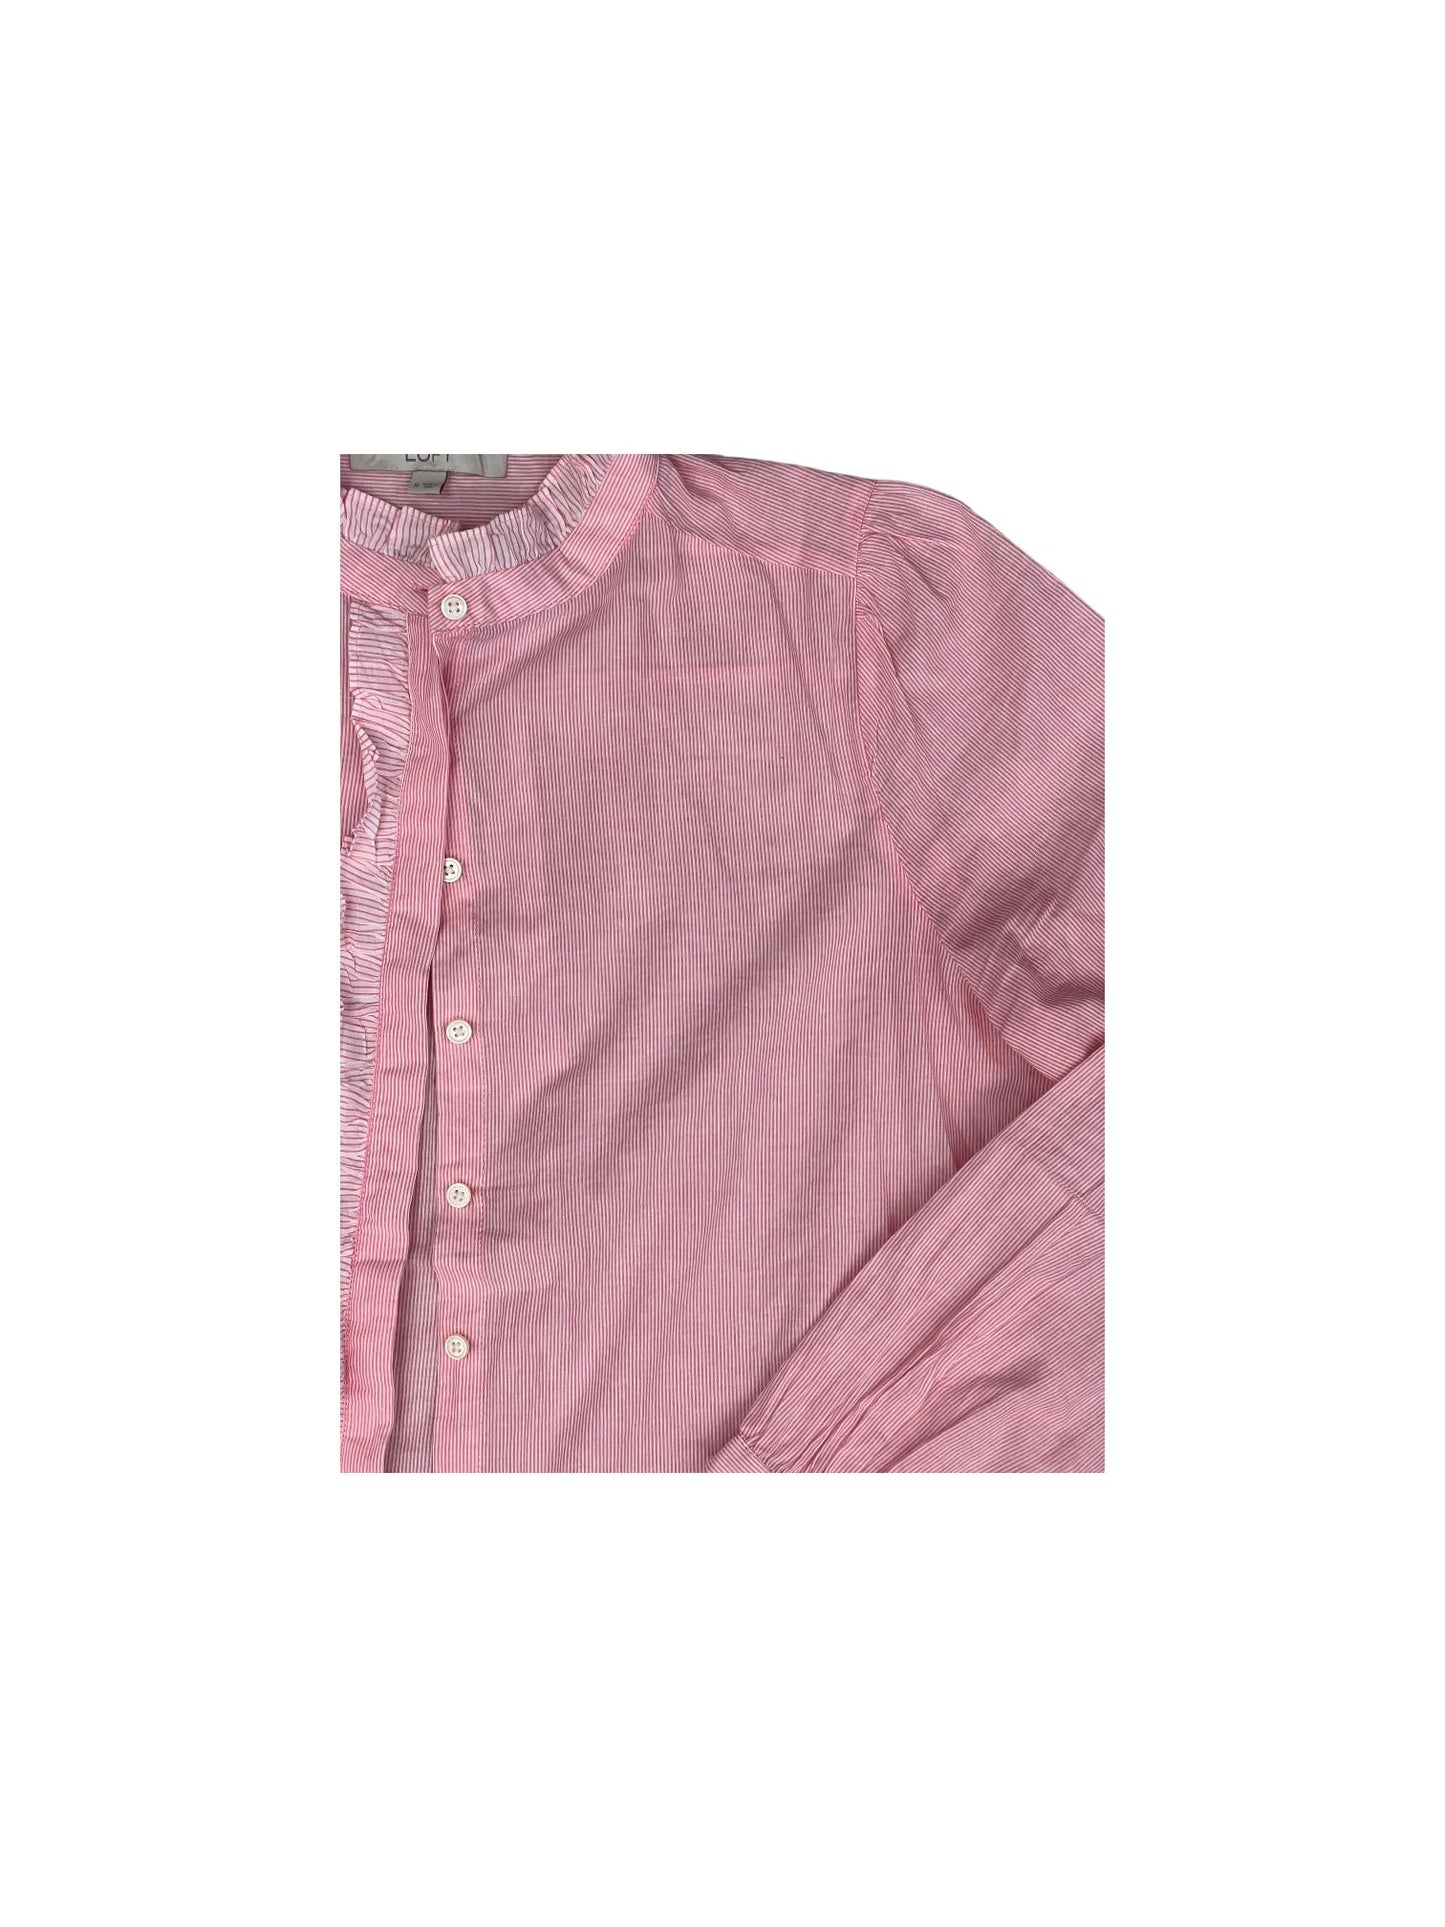 Pink Top Long Sleeve Loft, Size M